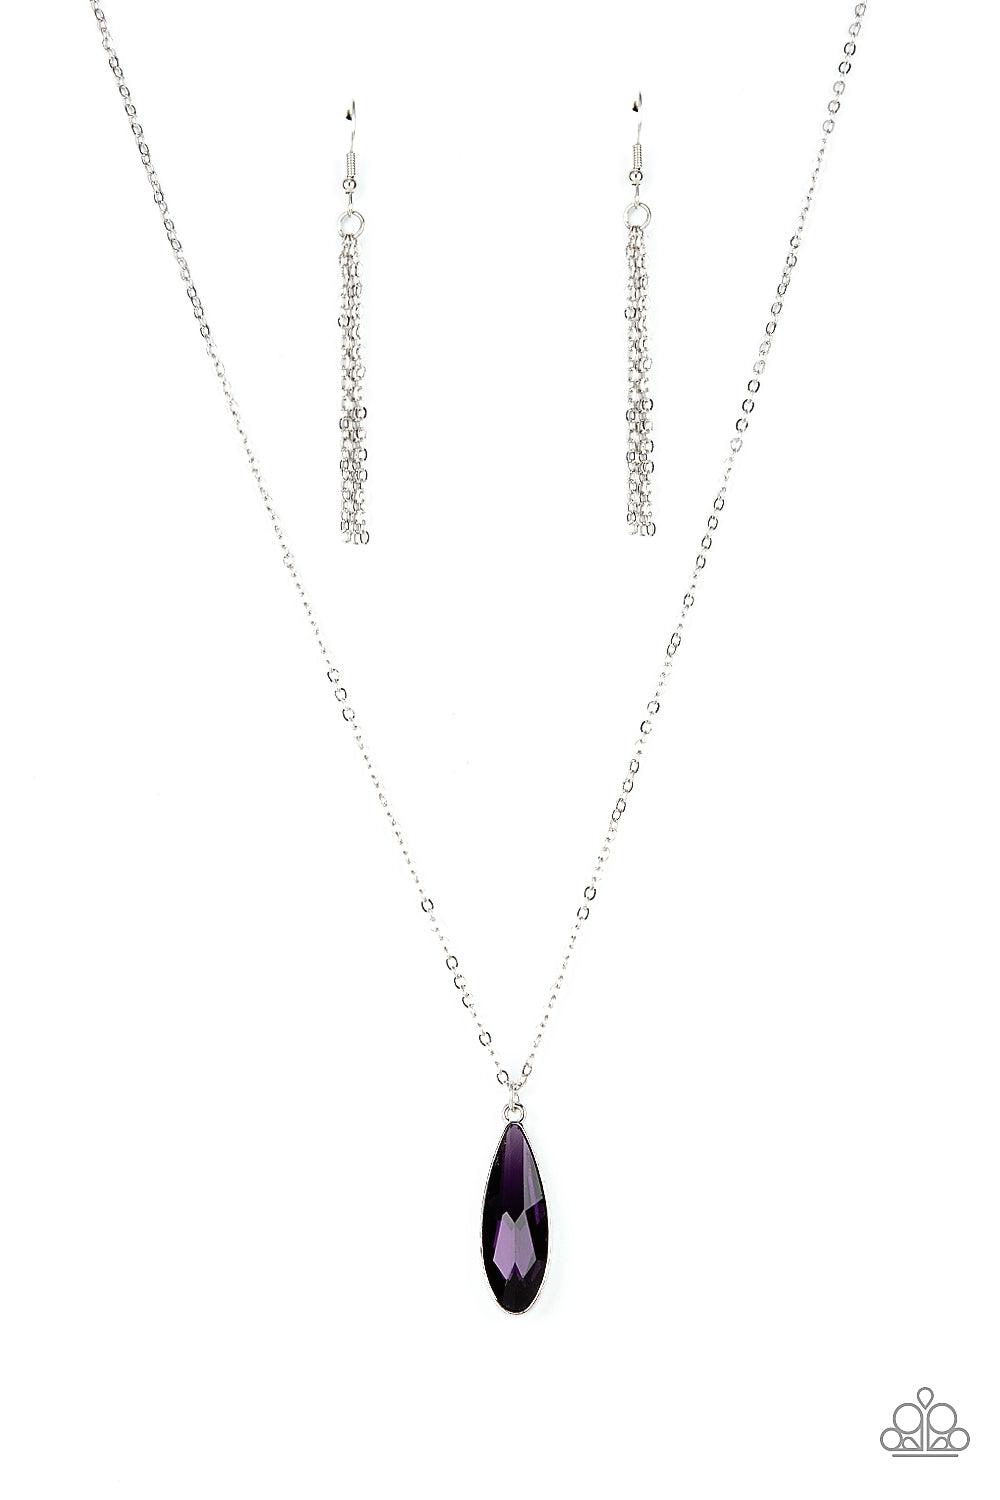 Prismatically Polished Purple Rhinestone Necklace - Paparazzi Accessories- lightbox - CarasShop.com - $5 Jewelry by Cara Jewels